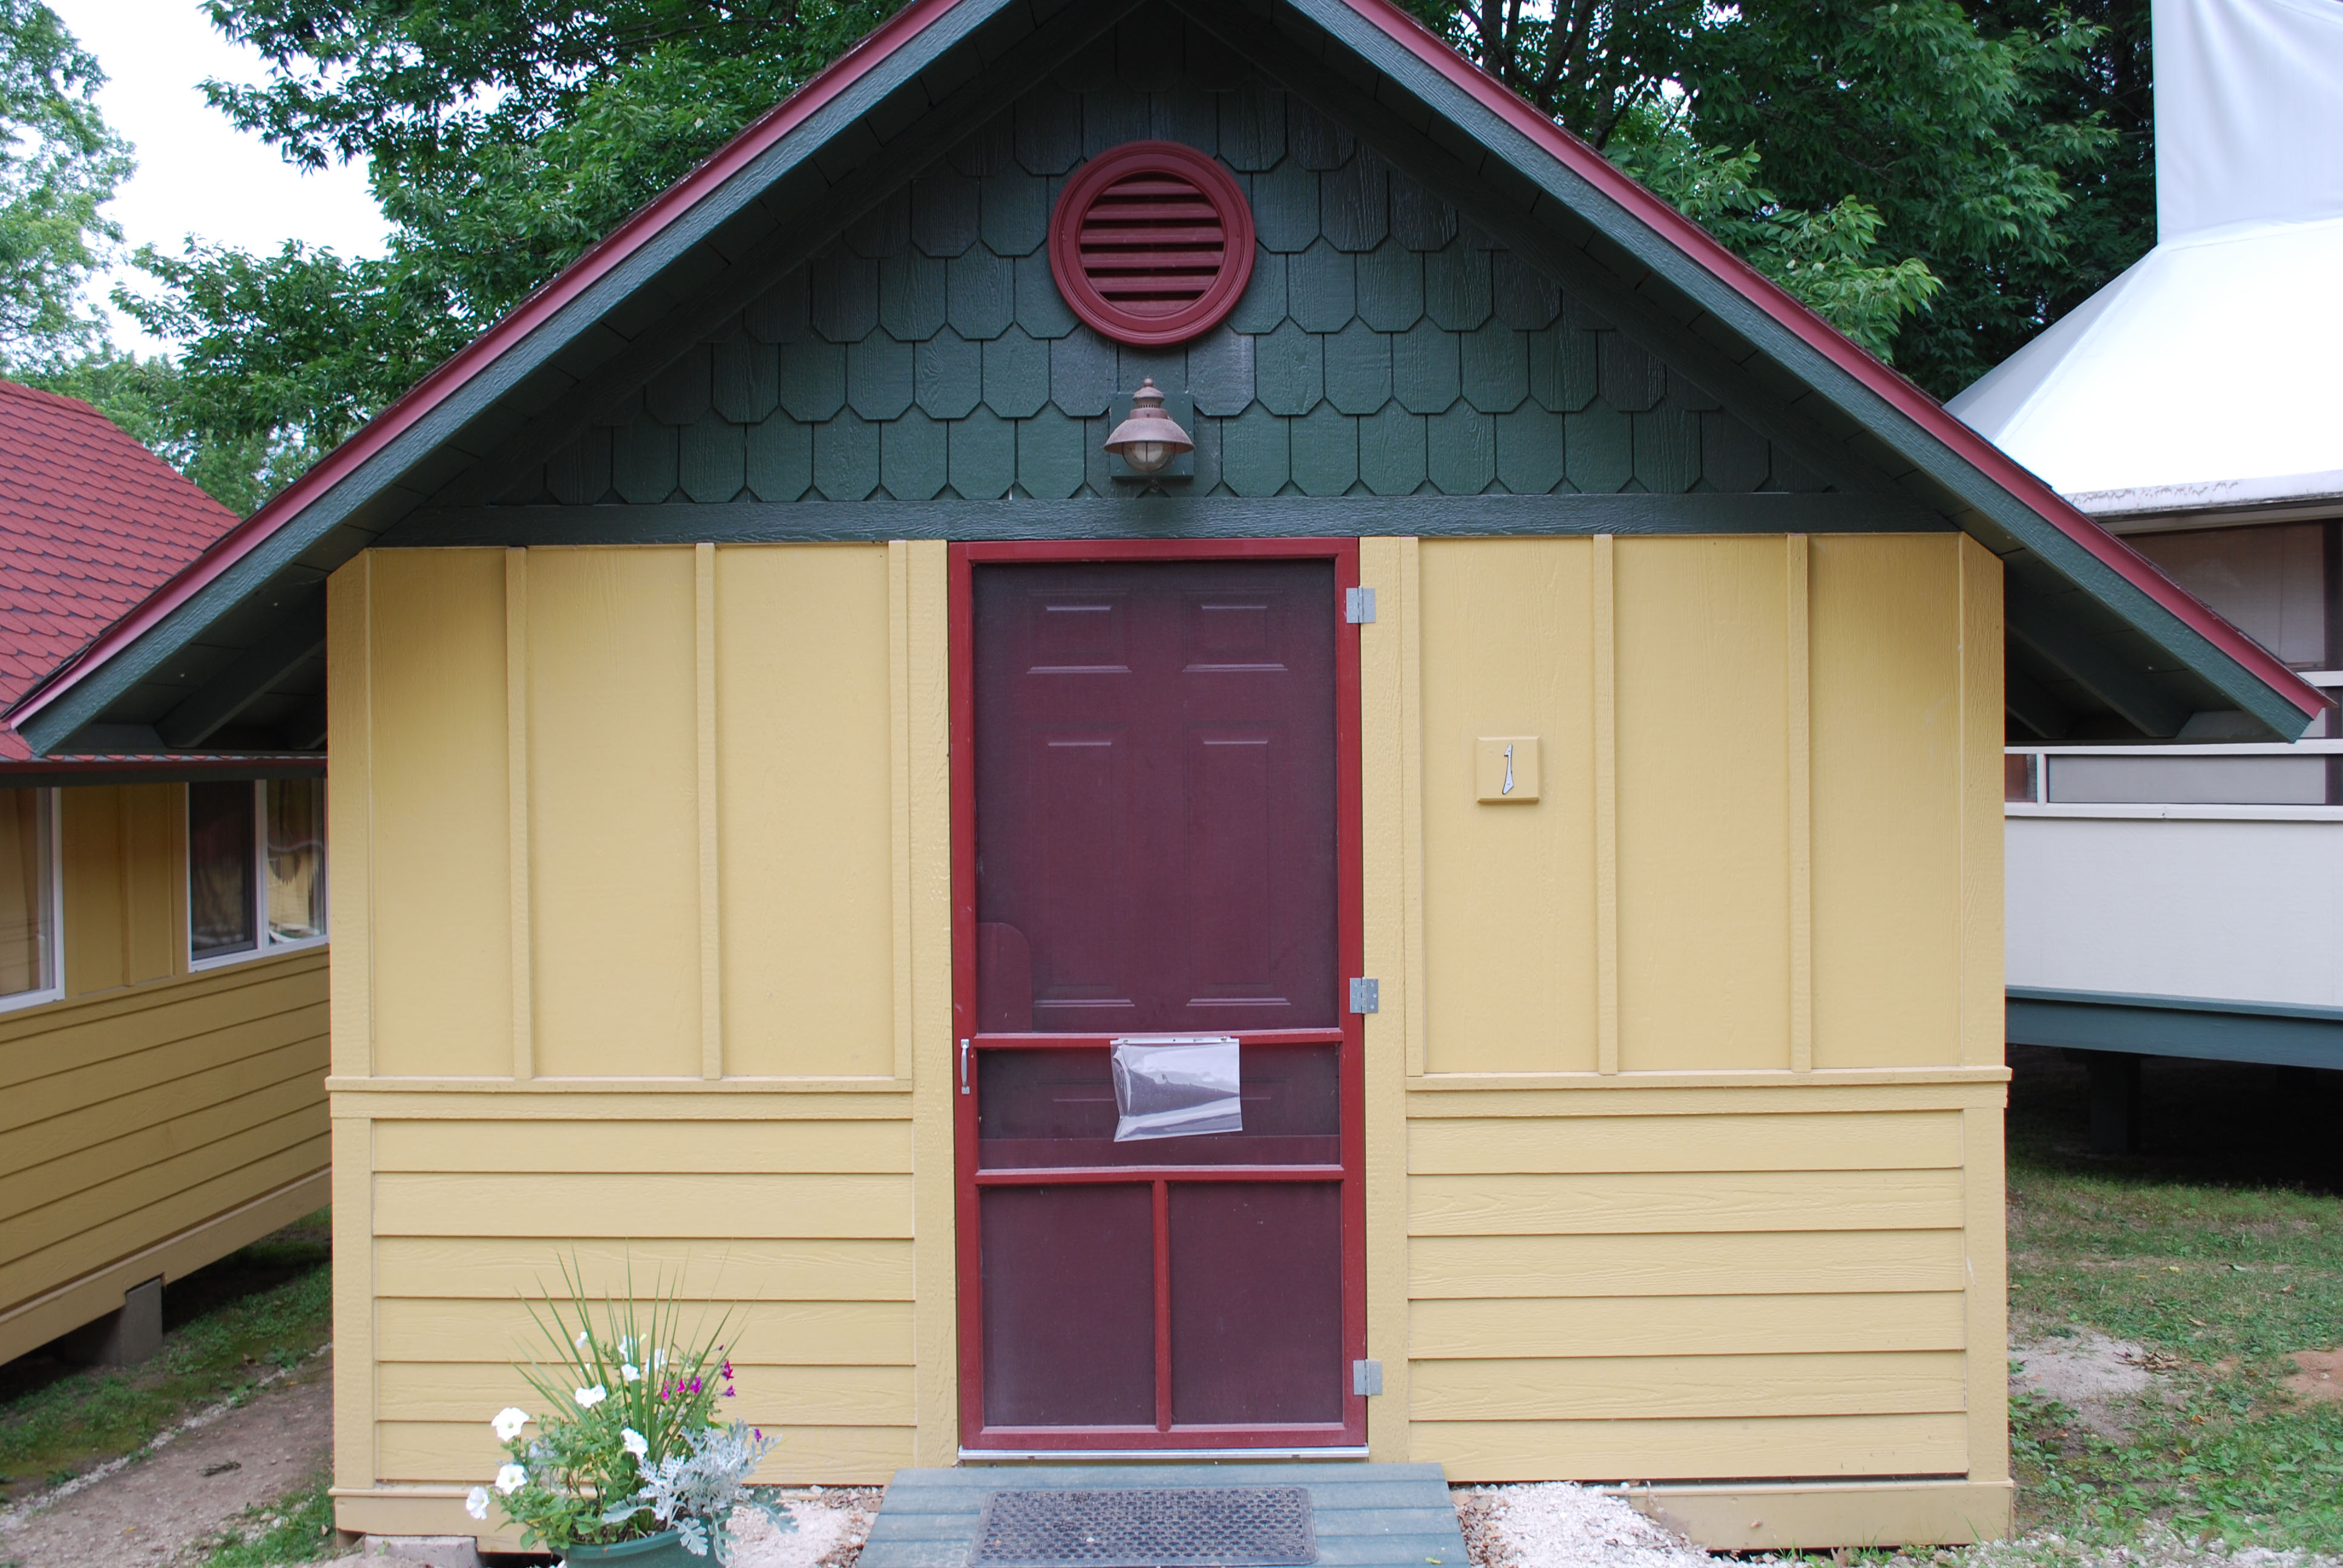 Cabin exterior